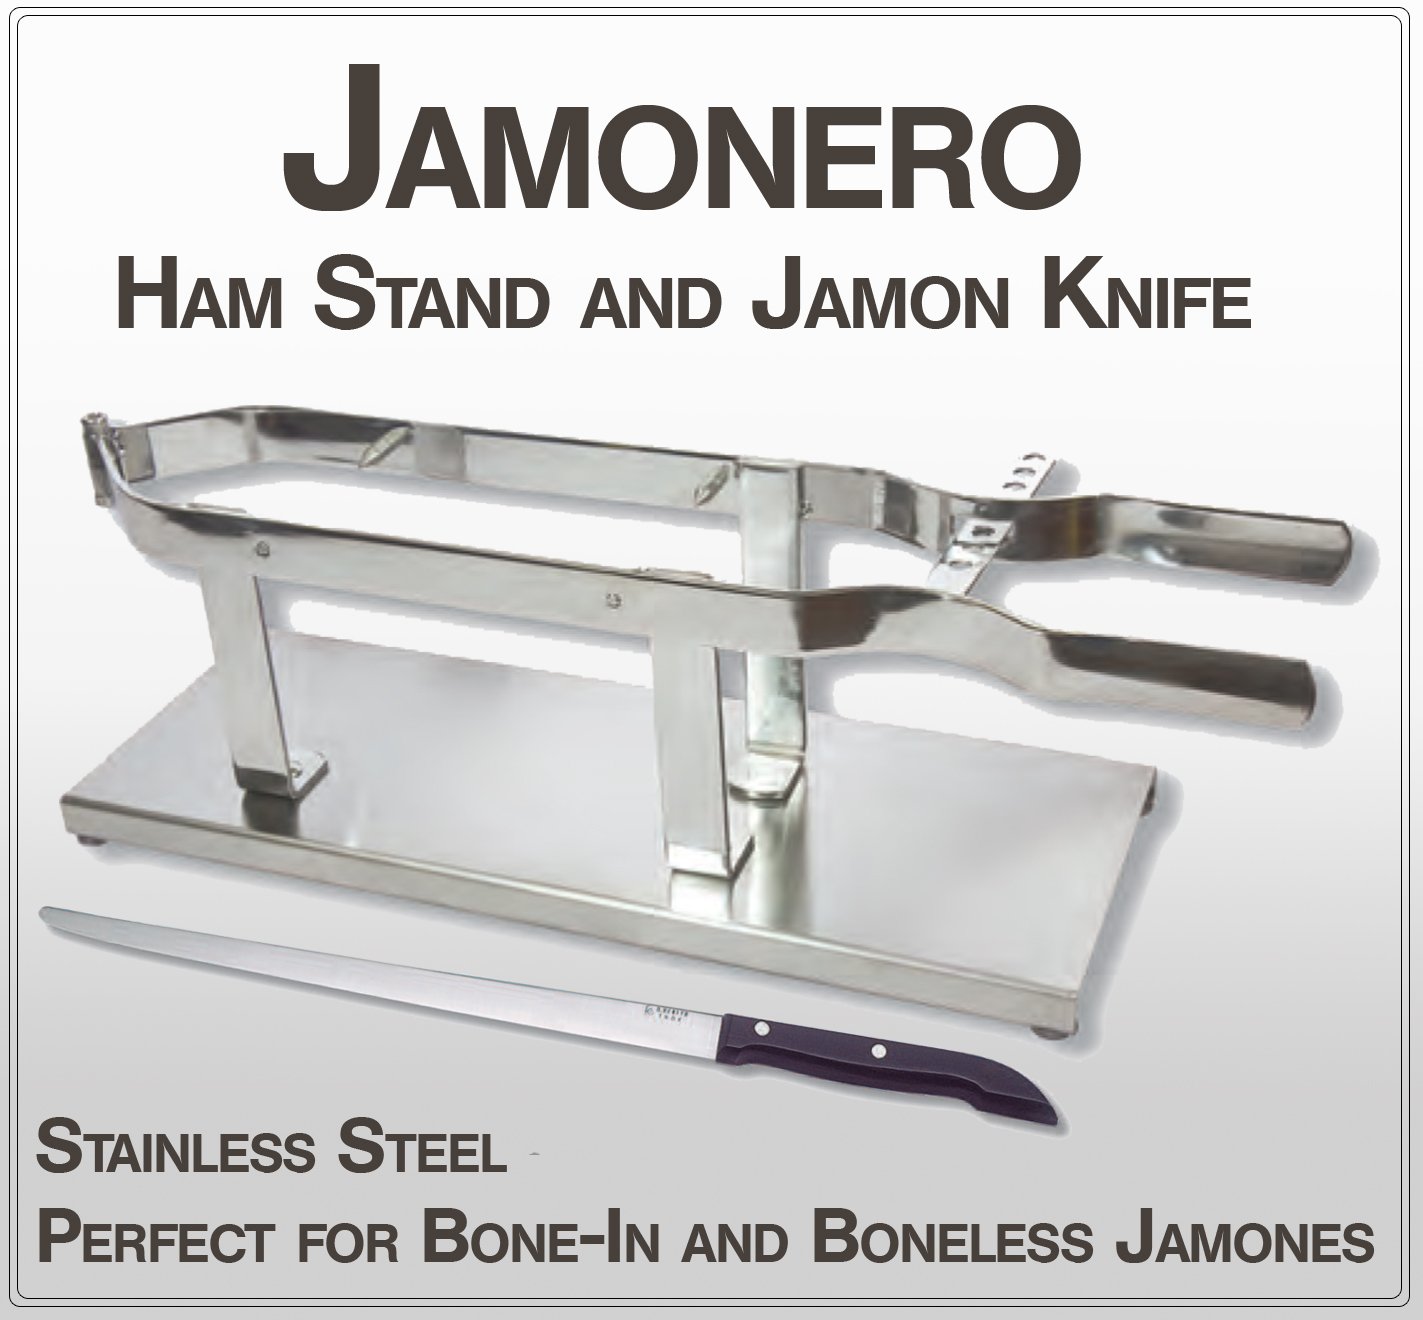 SS Jamonero and Knife.jpg